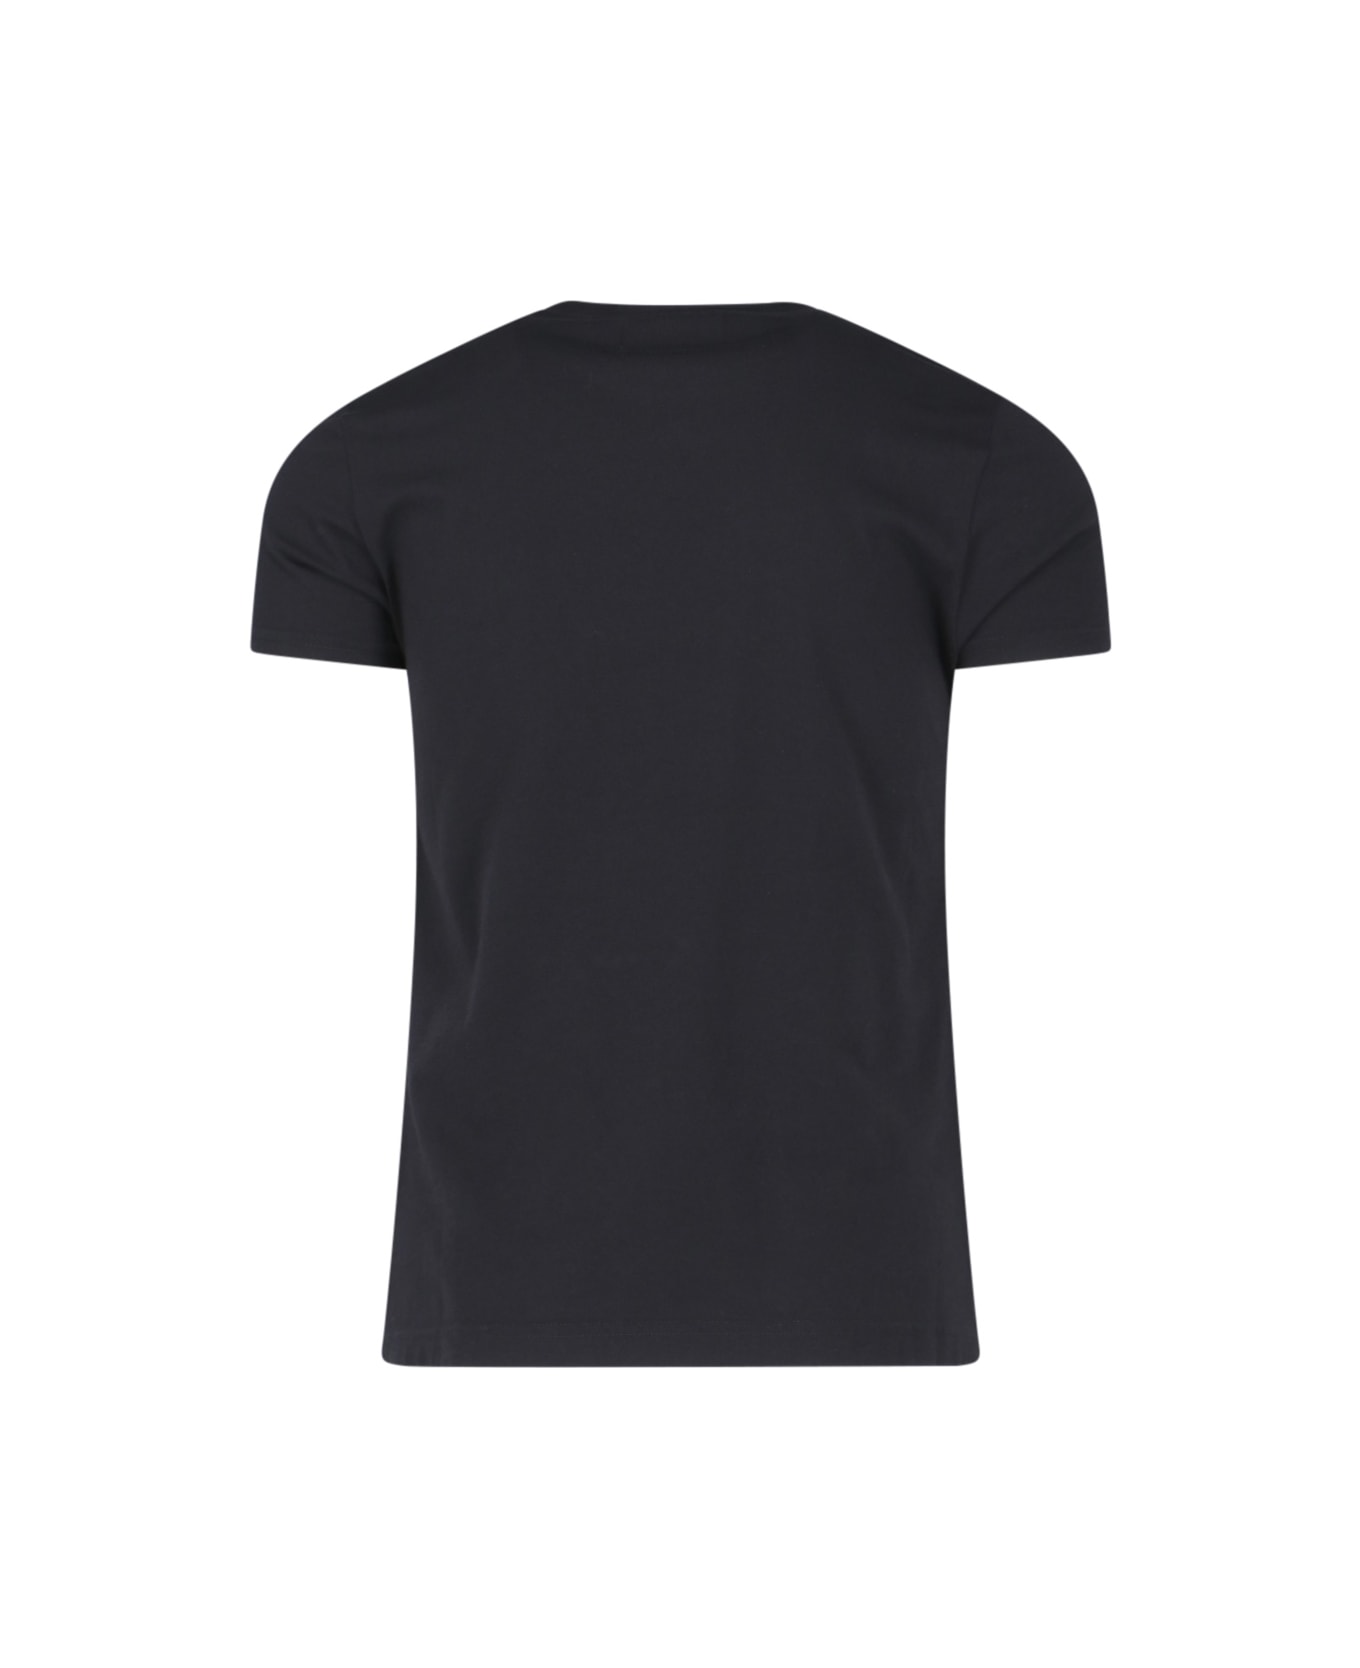 Vivienne Westwood Orb T-shirt - BLACK